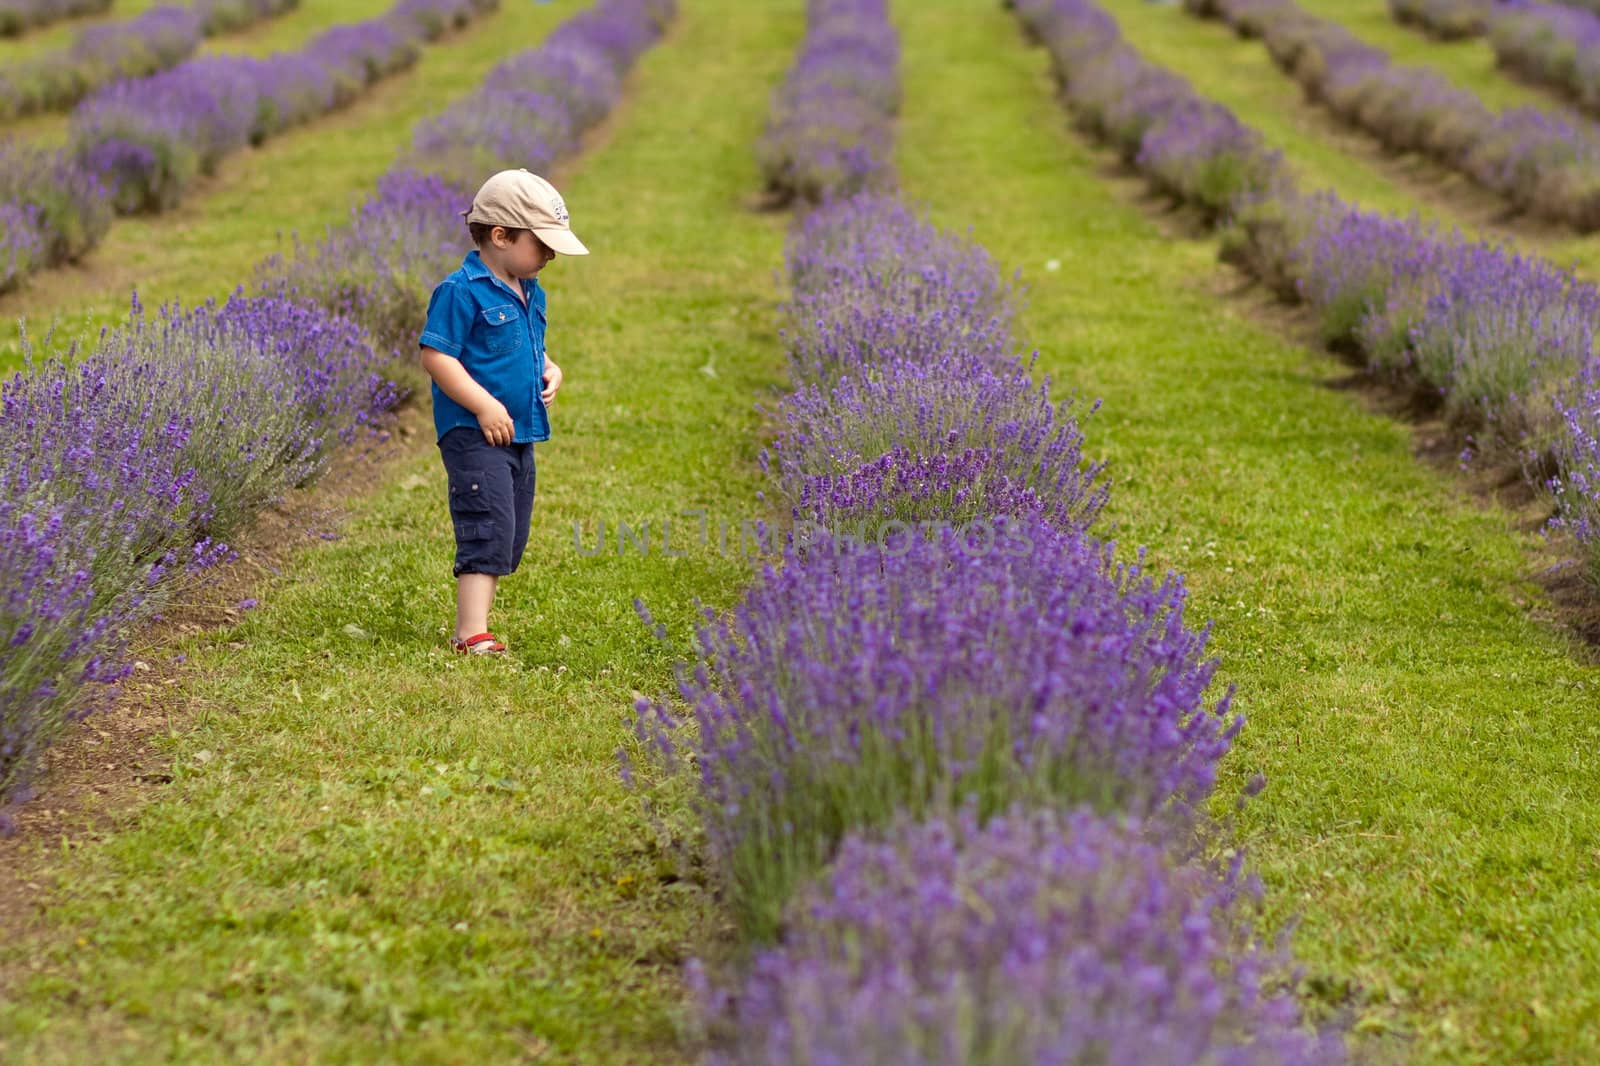 Boy in a lavender field by Talanis